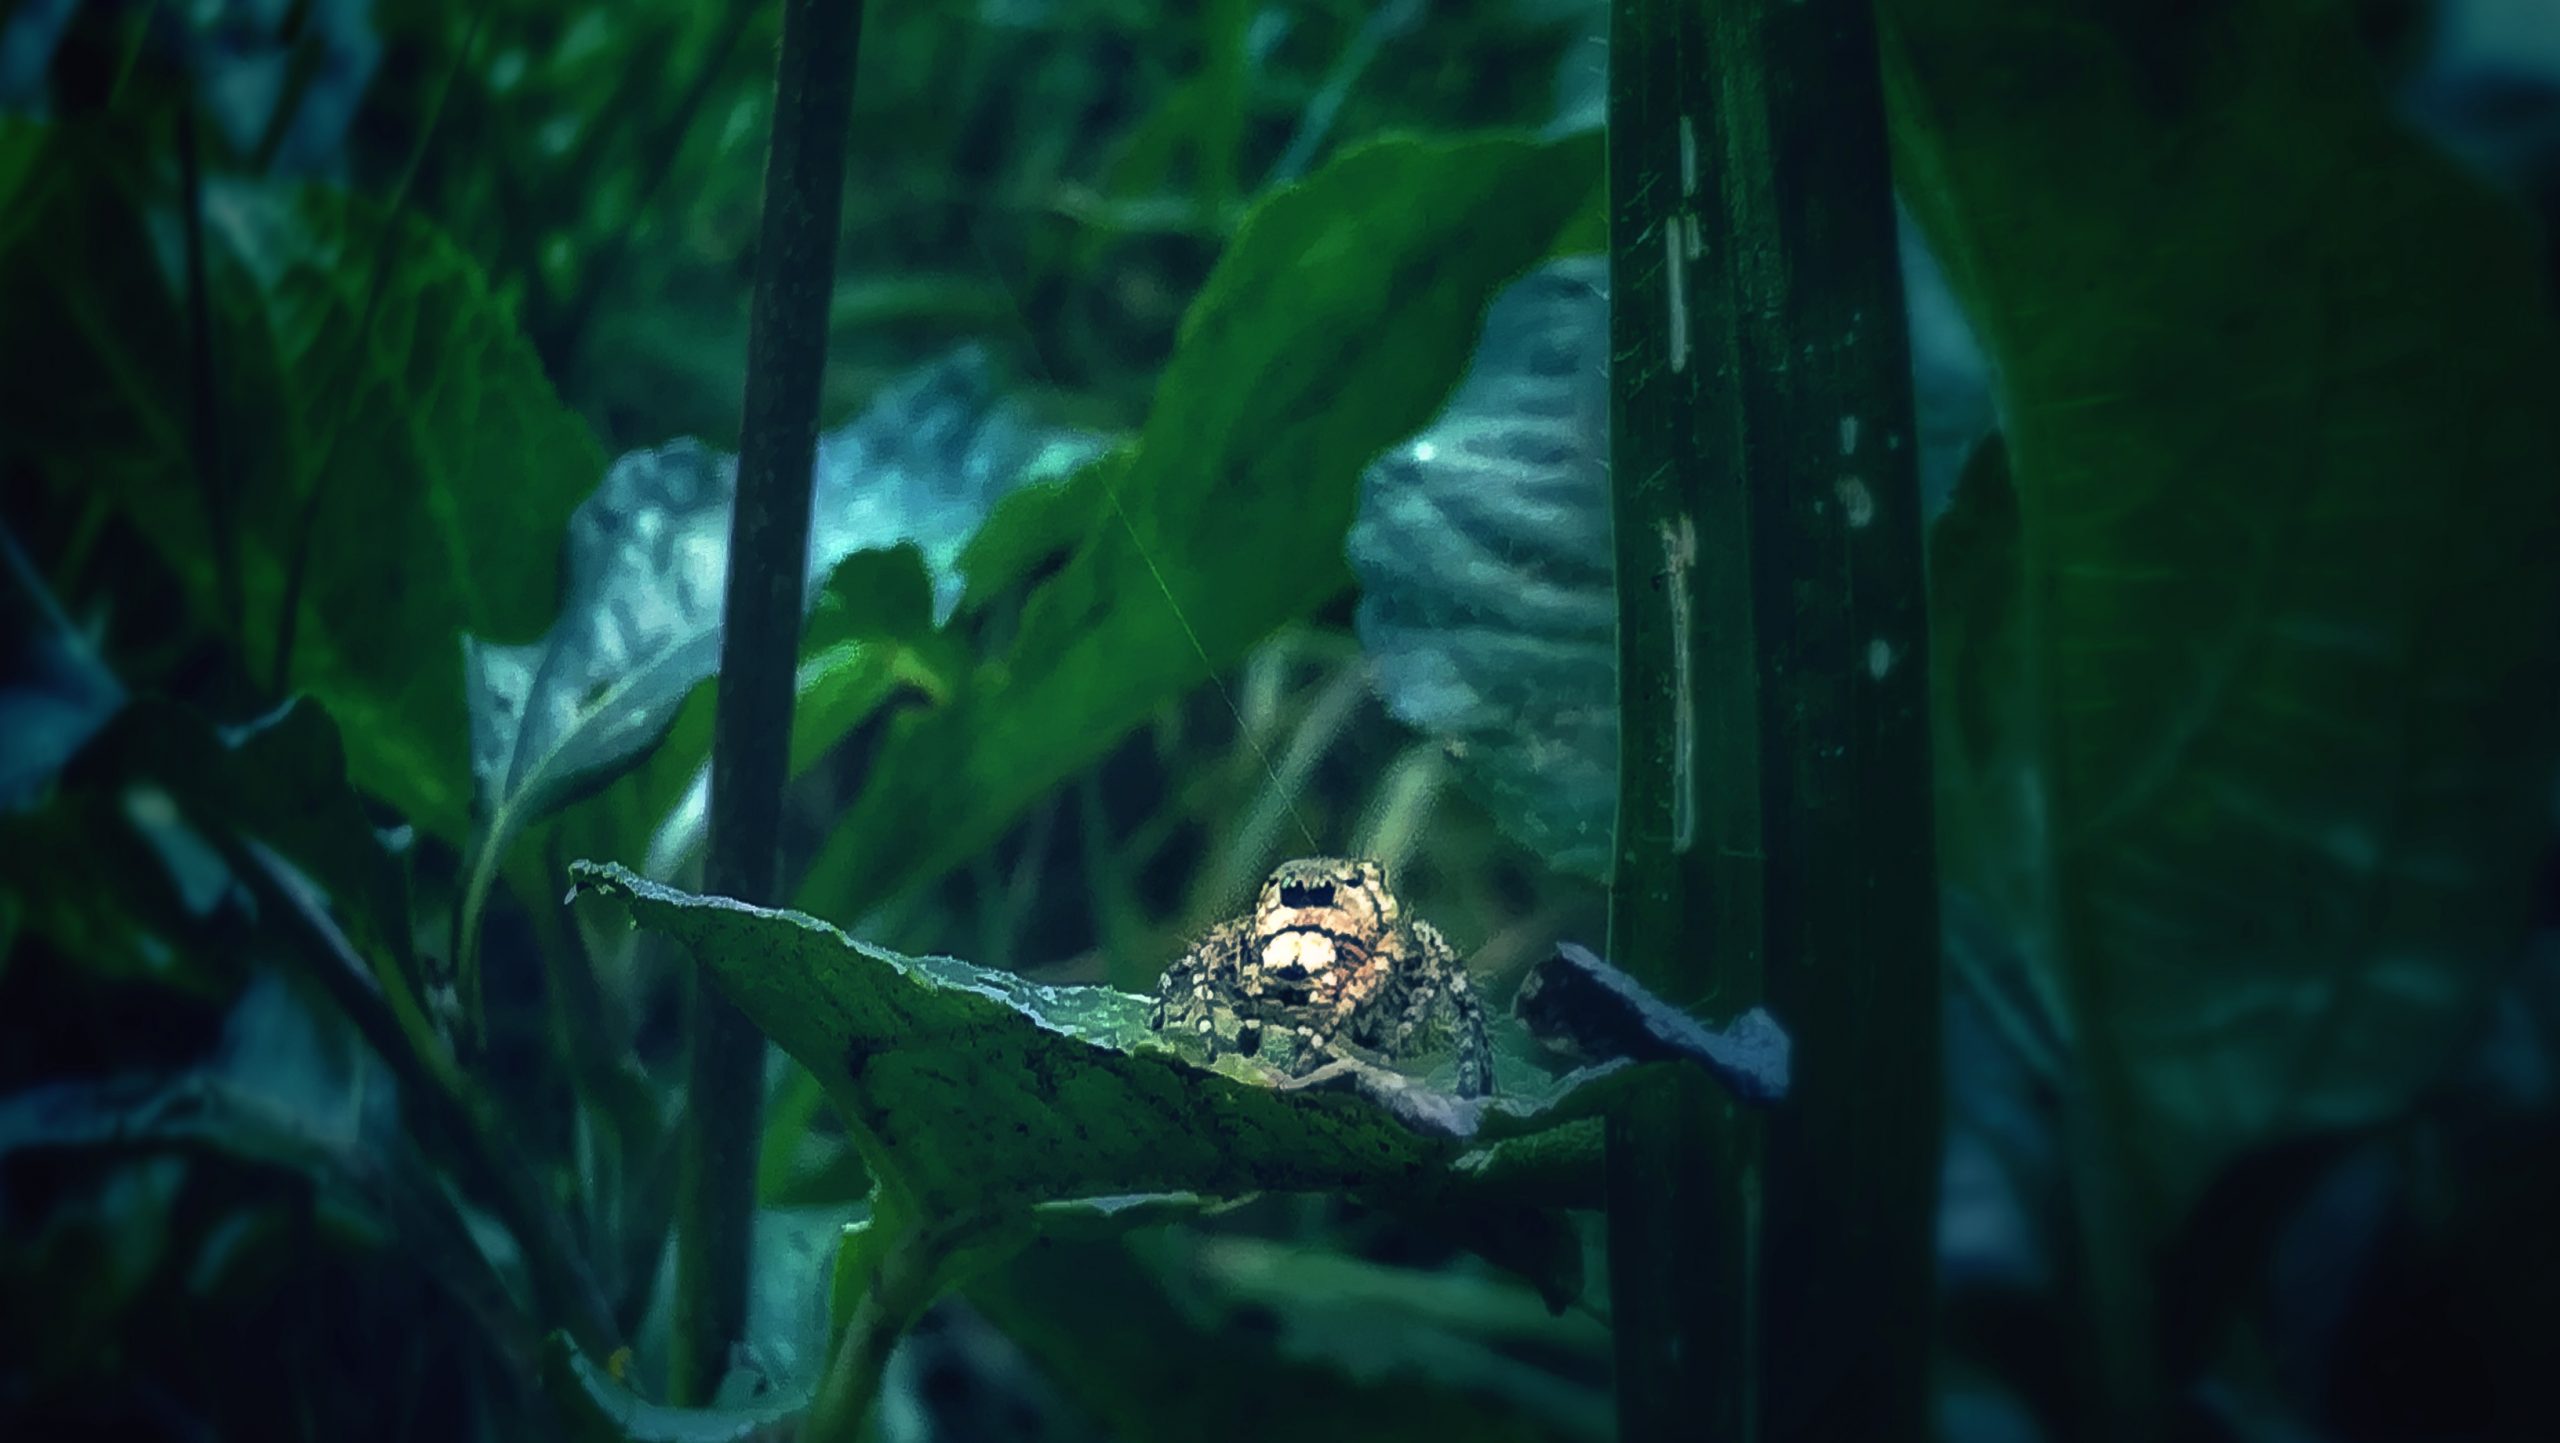 spider on a leaf